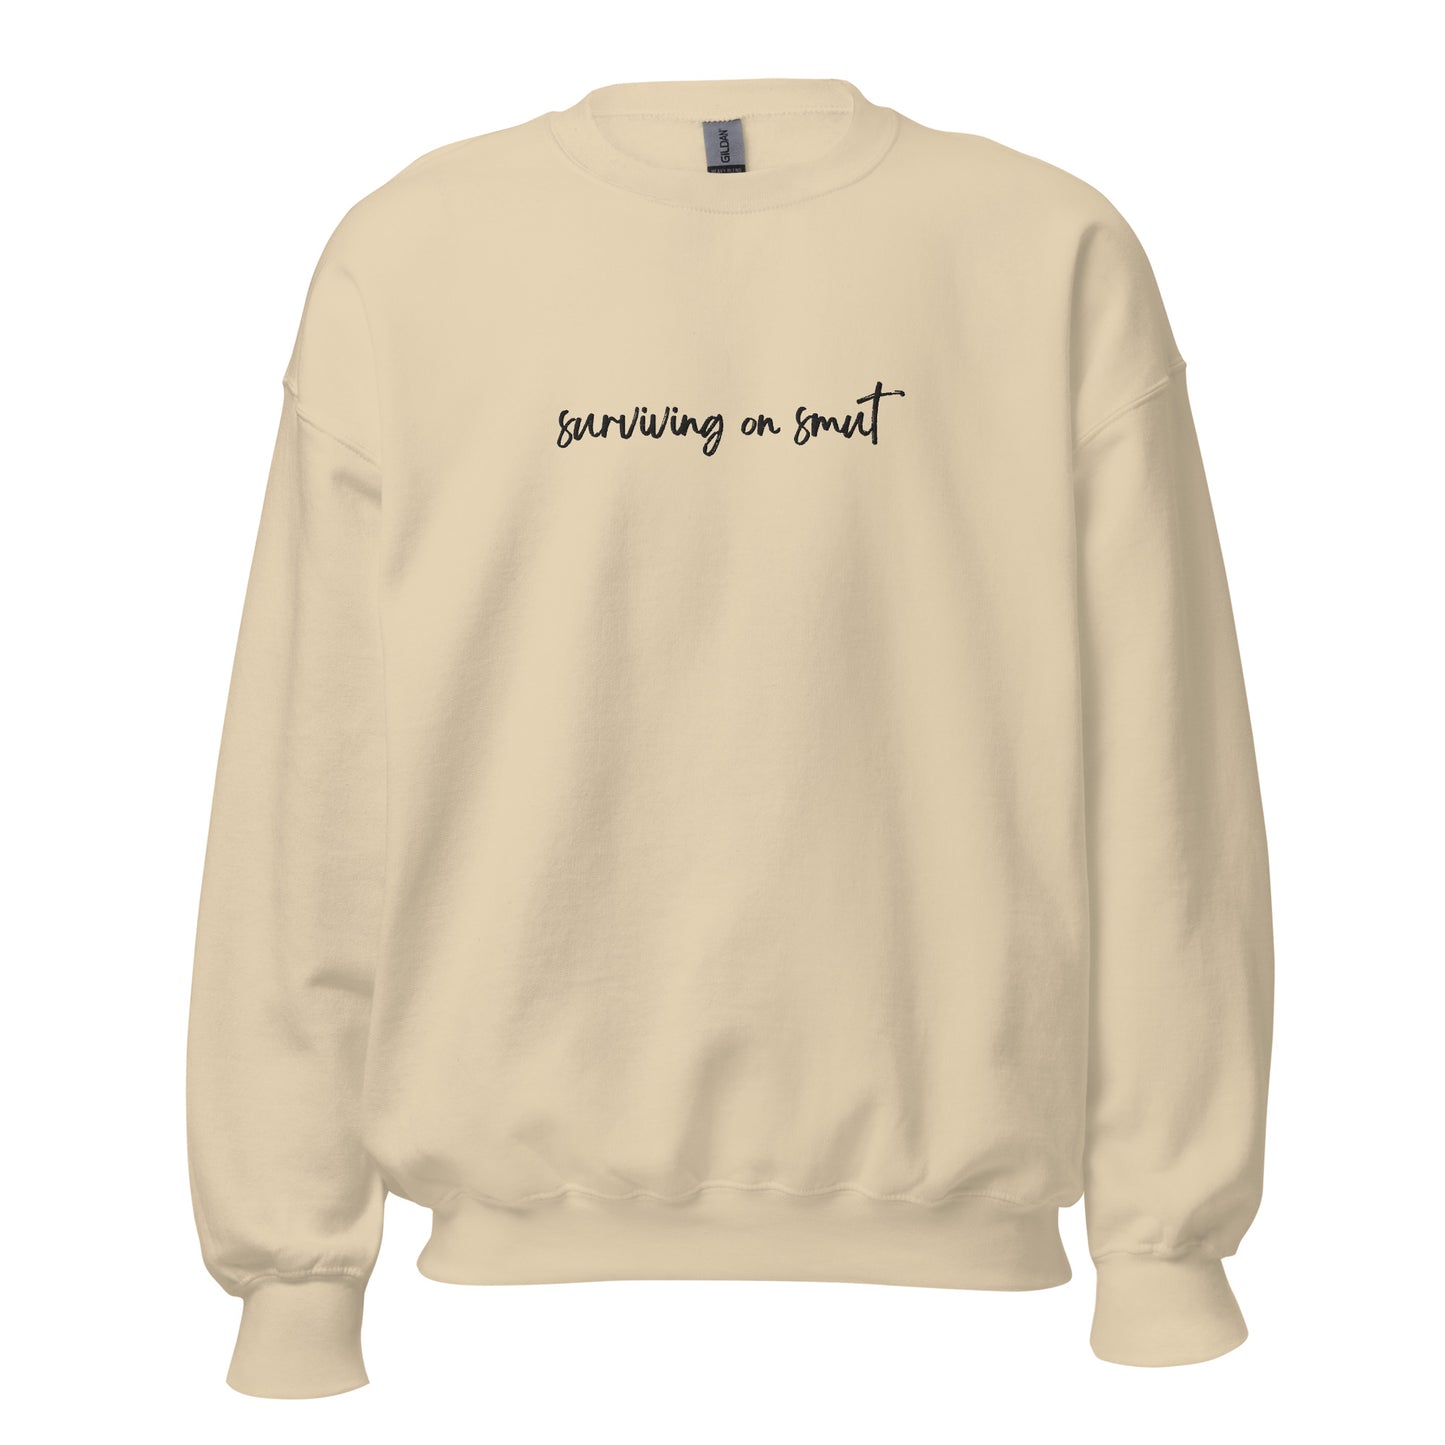 surviving on smut embroidered sweatshirt